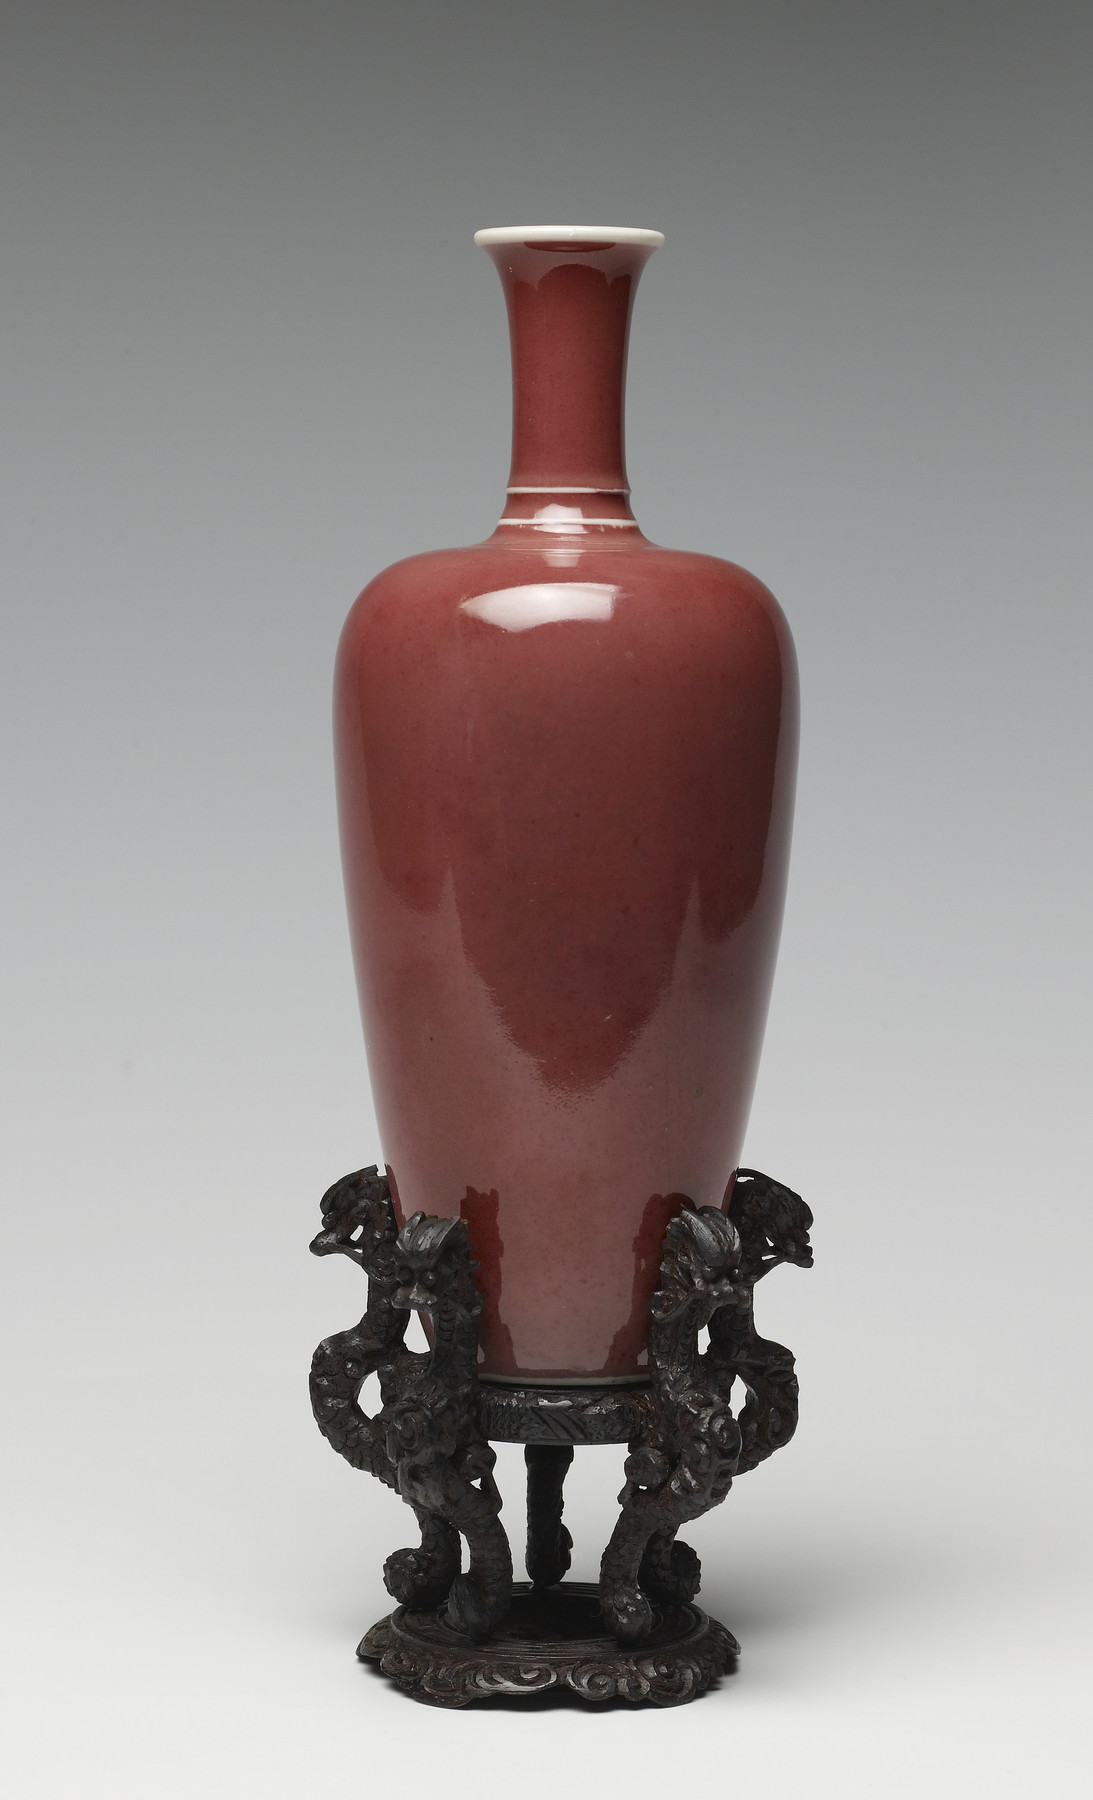 Image for "Three-String" Vase